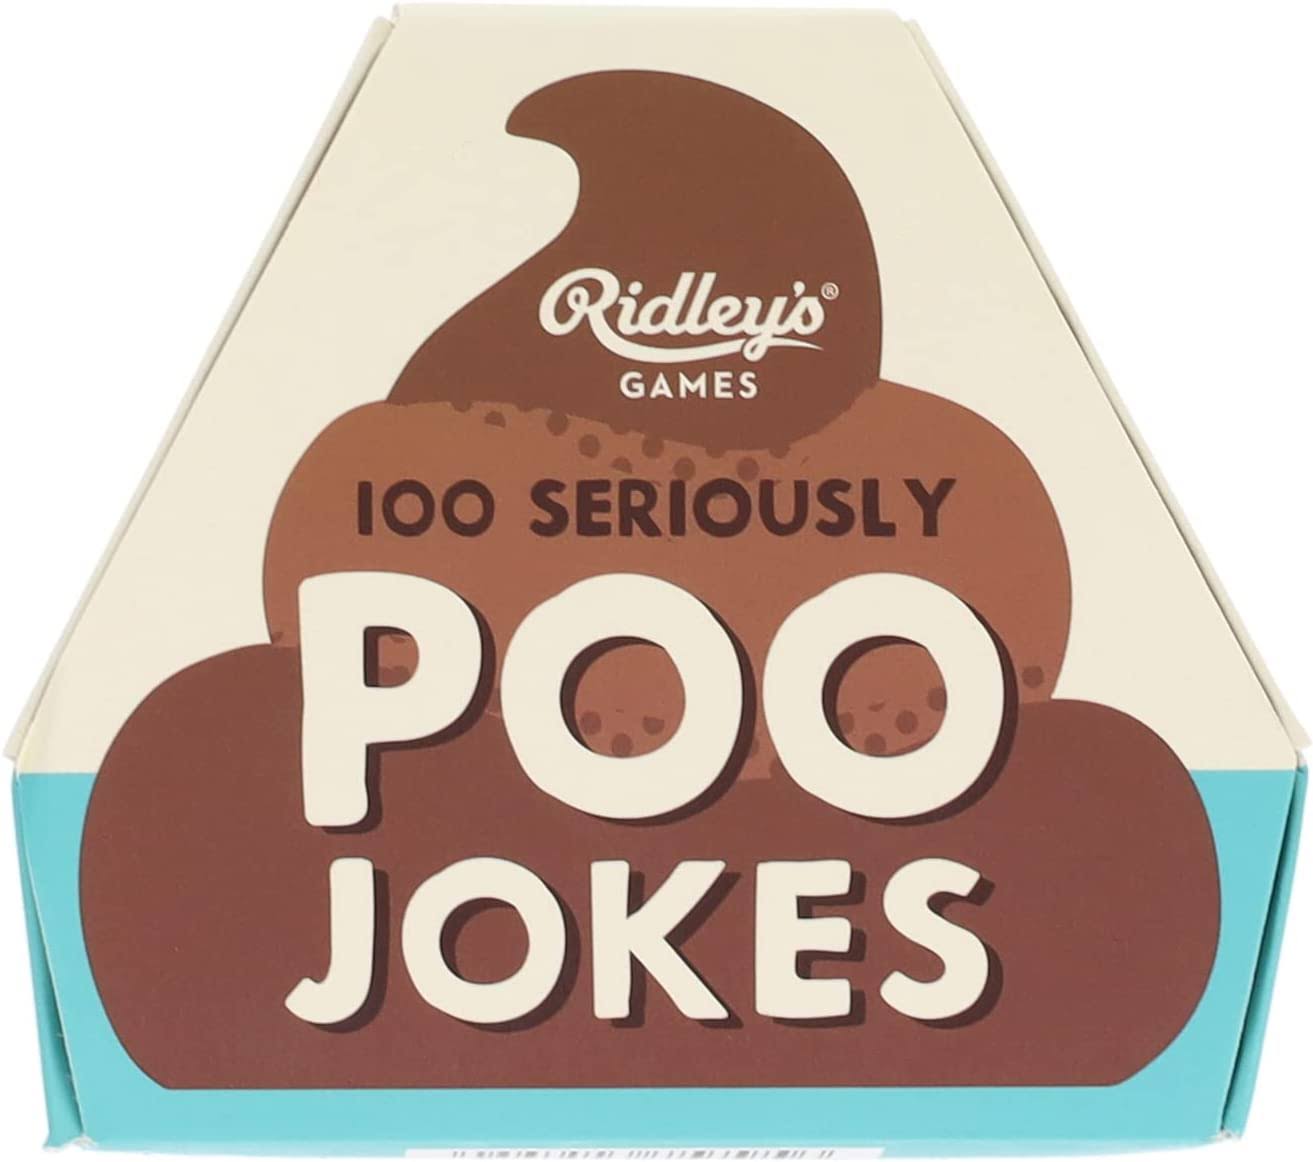 100 Poo Jokes